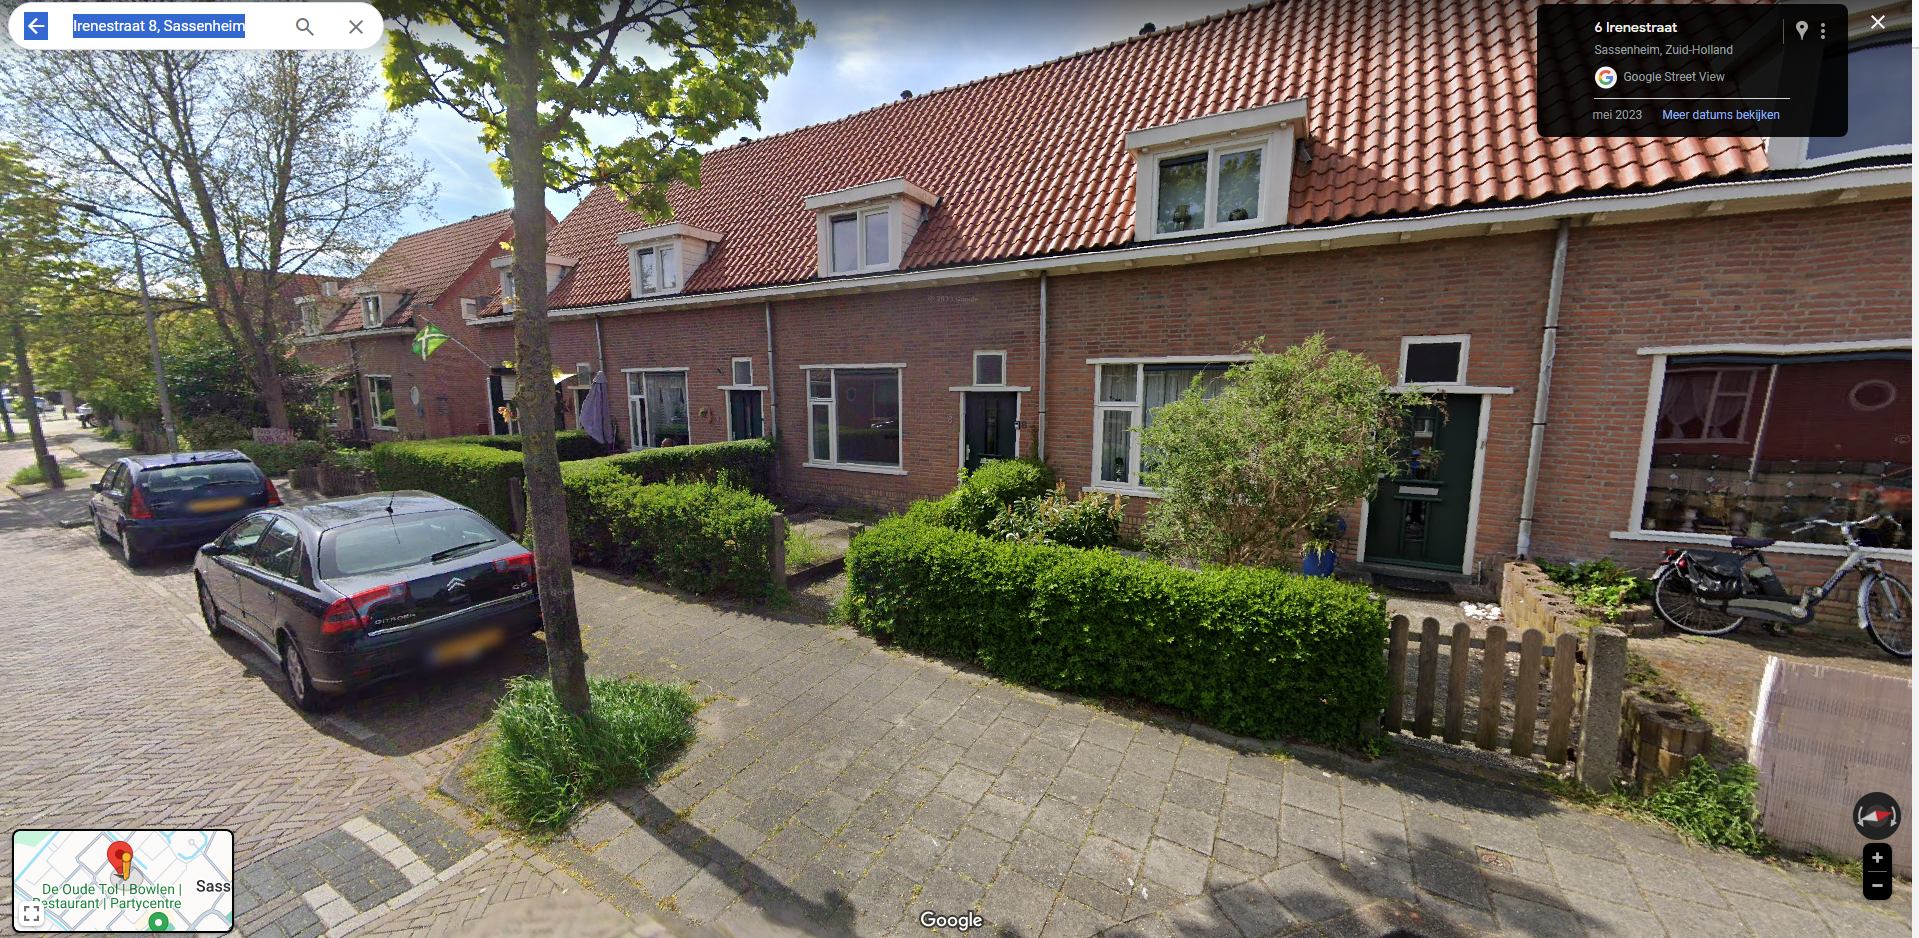 Irenestraat 8, 2171 XA Sassenheim, Nederland